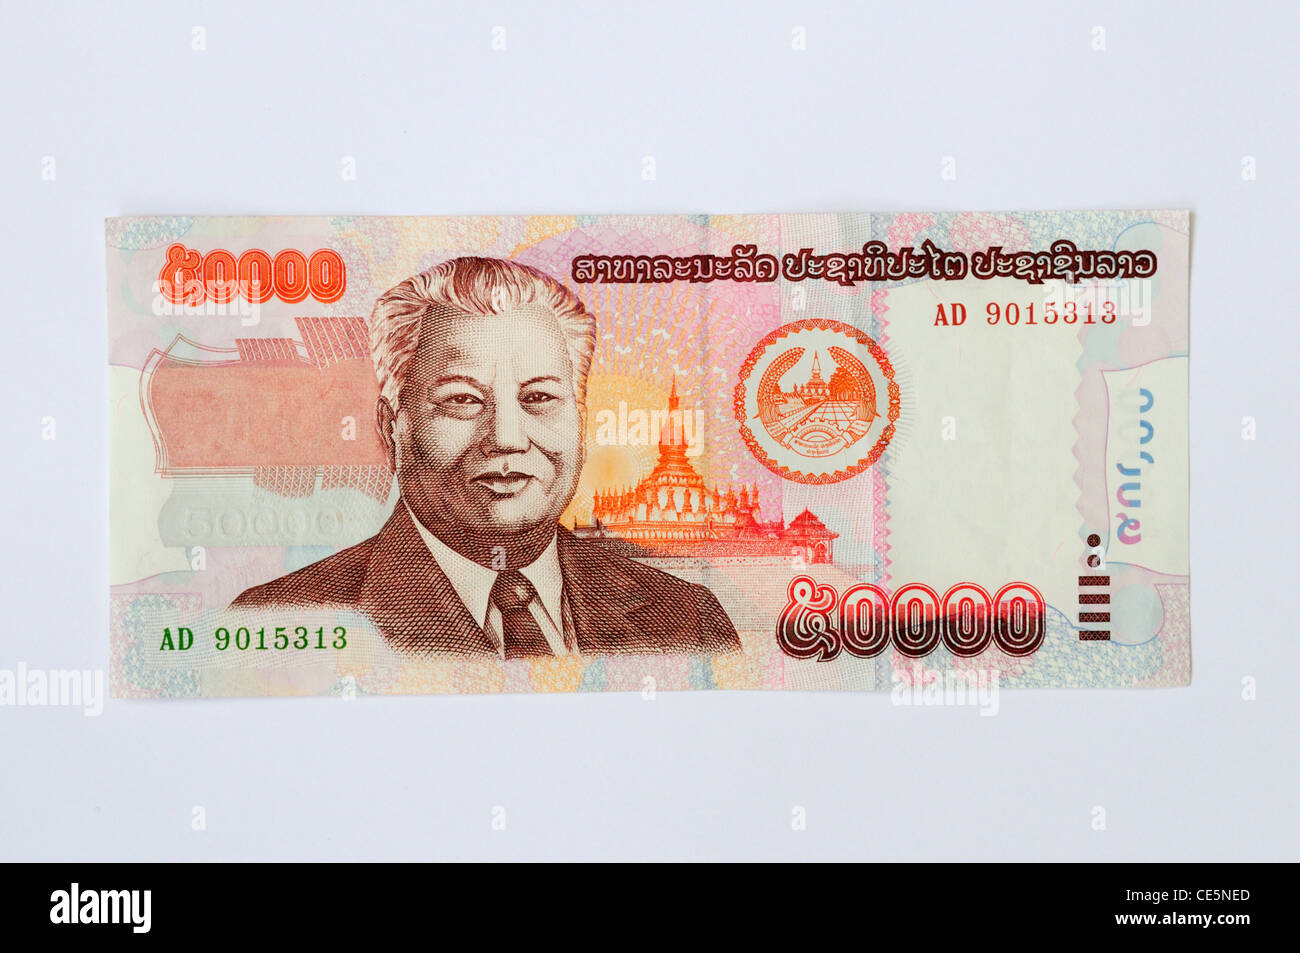 50,000 Laos Kip Banknote Stock Photo